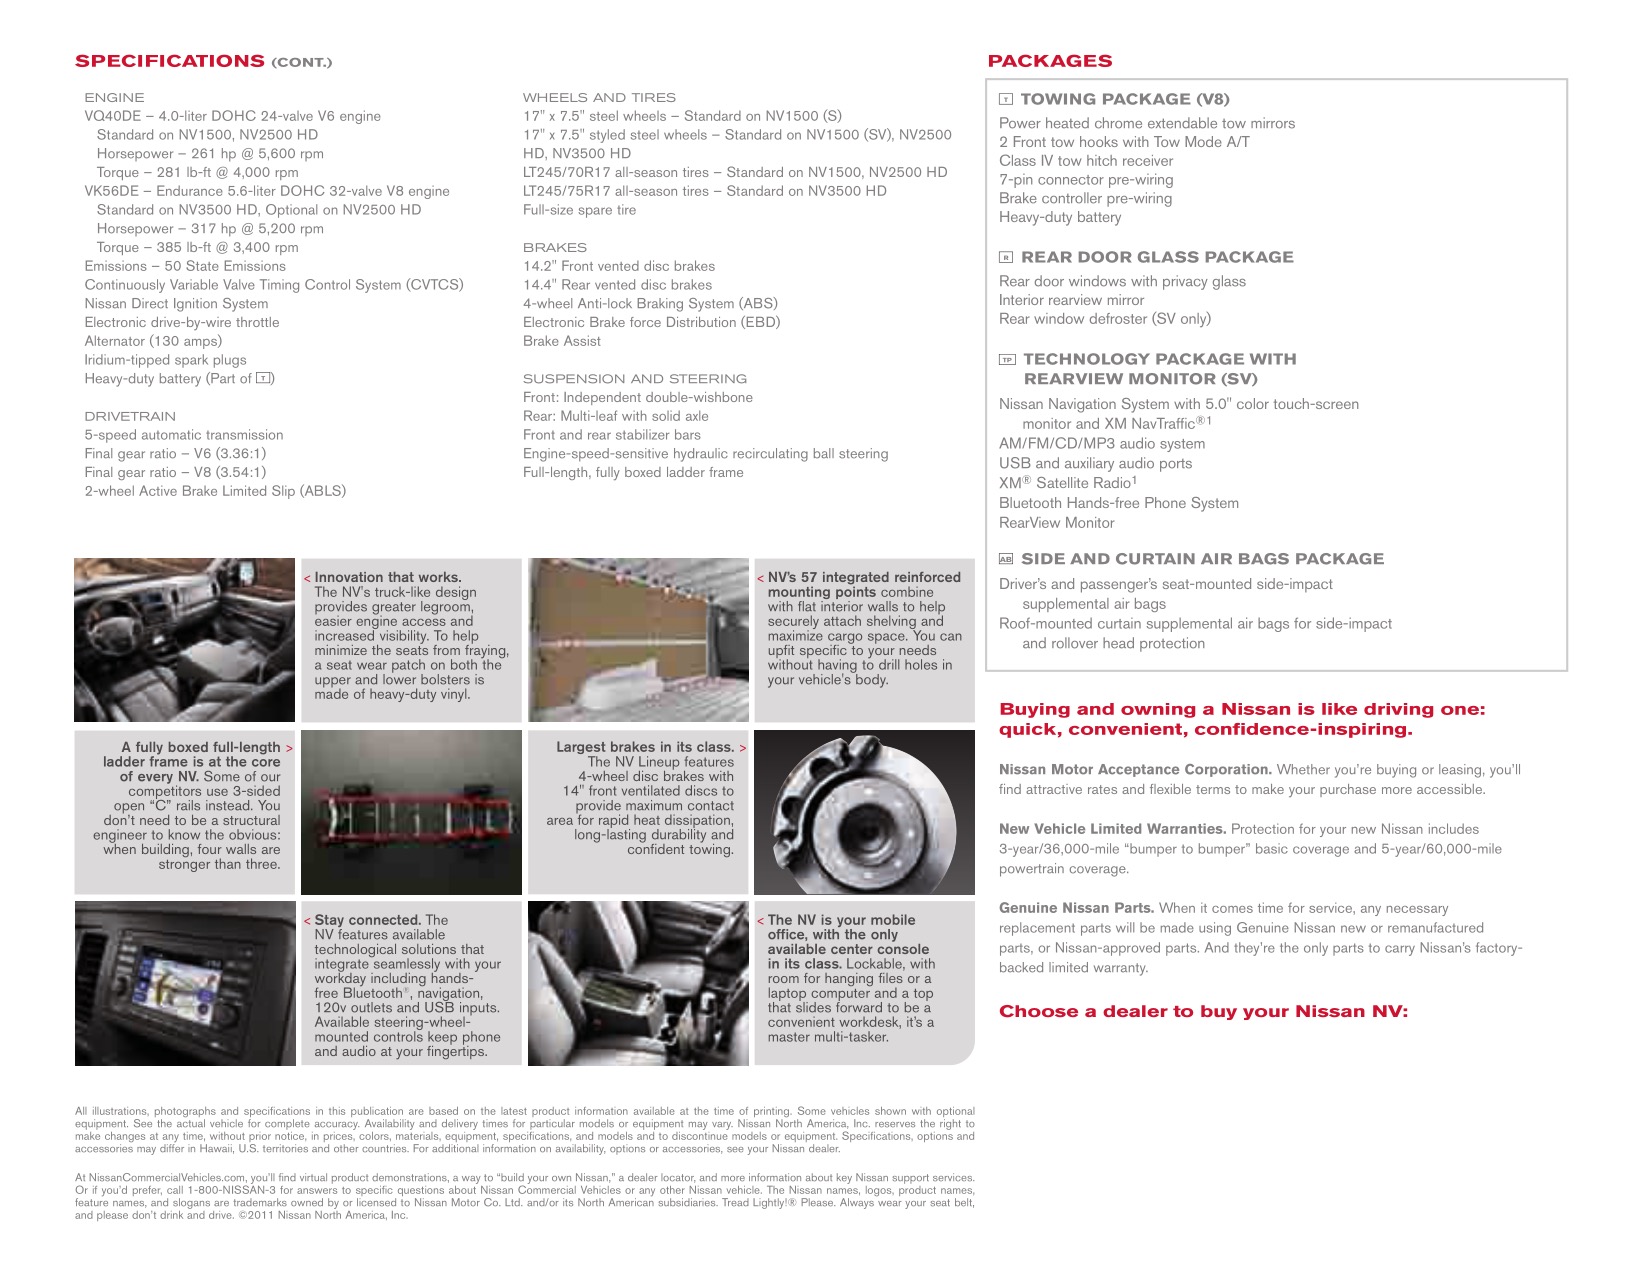 2012 Nissan NV Brochure Page 3